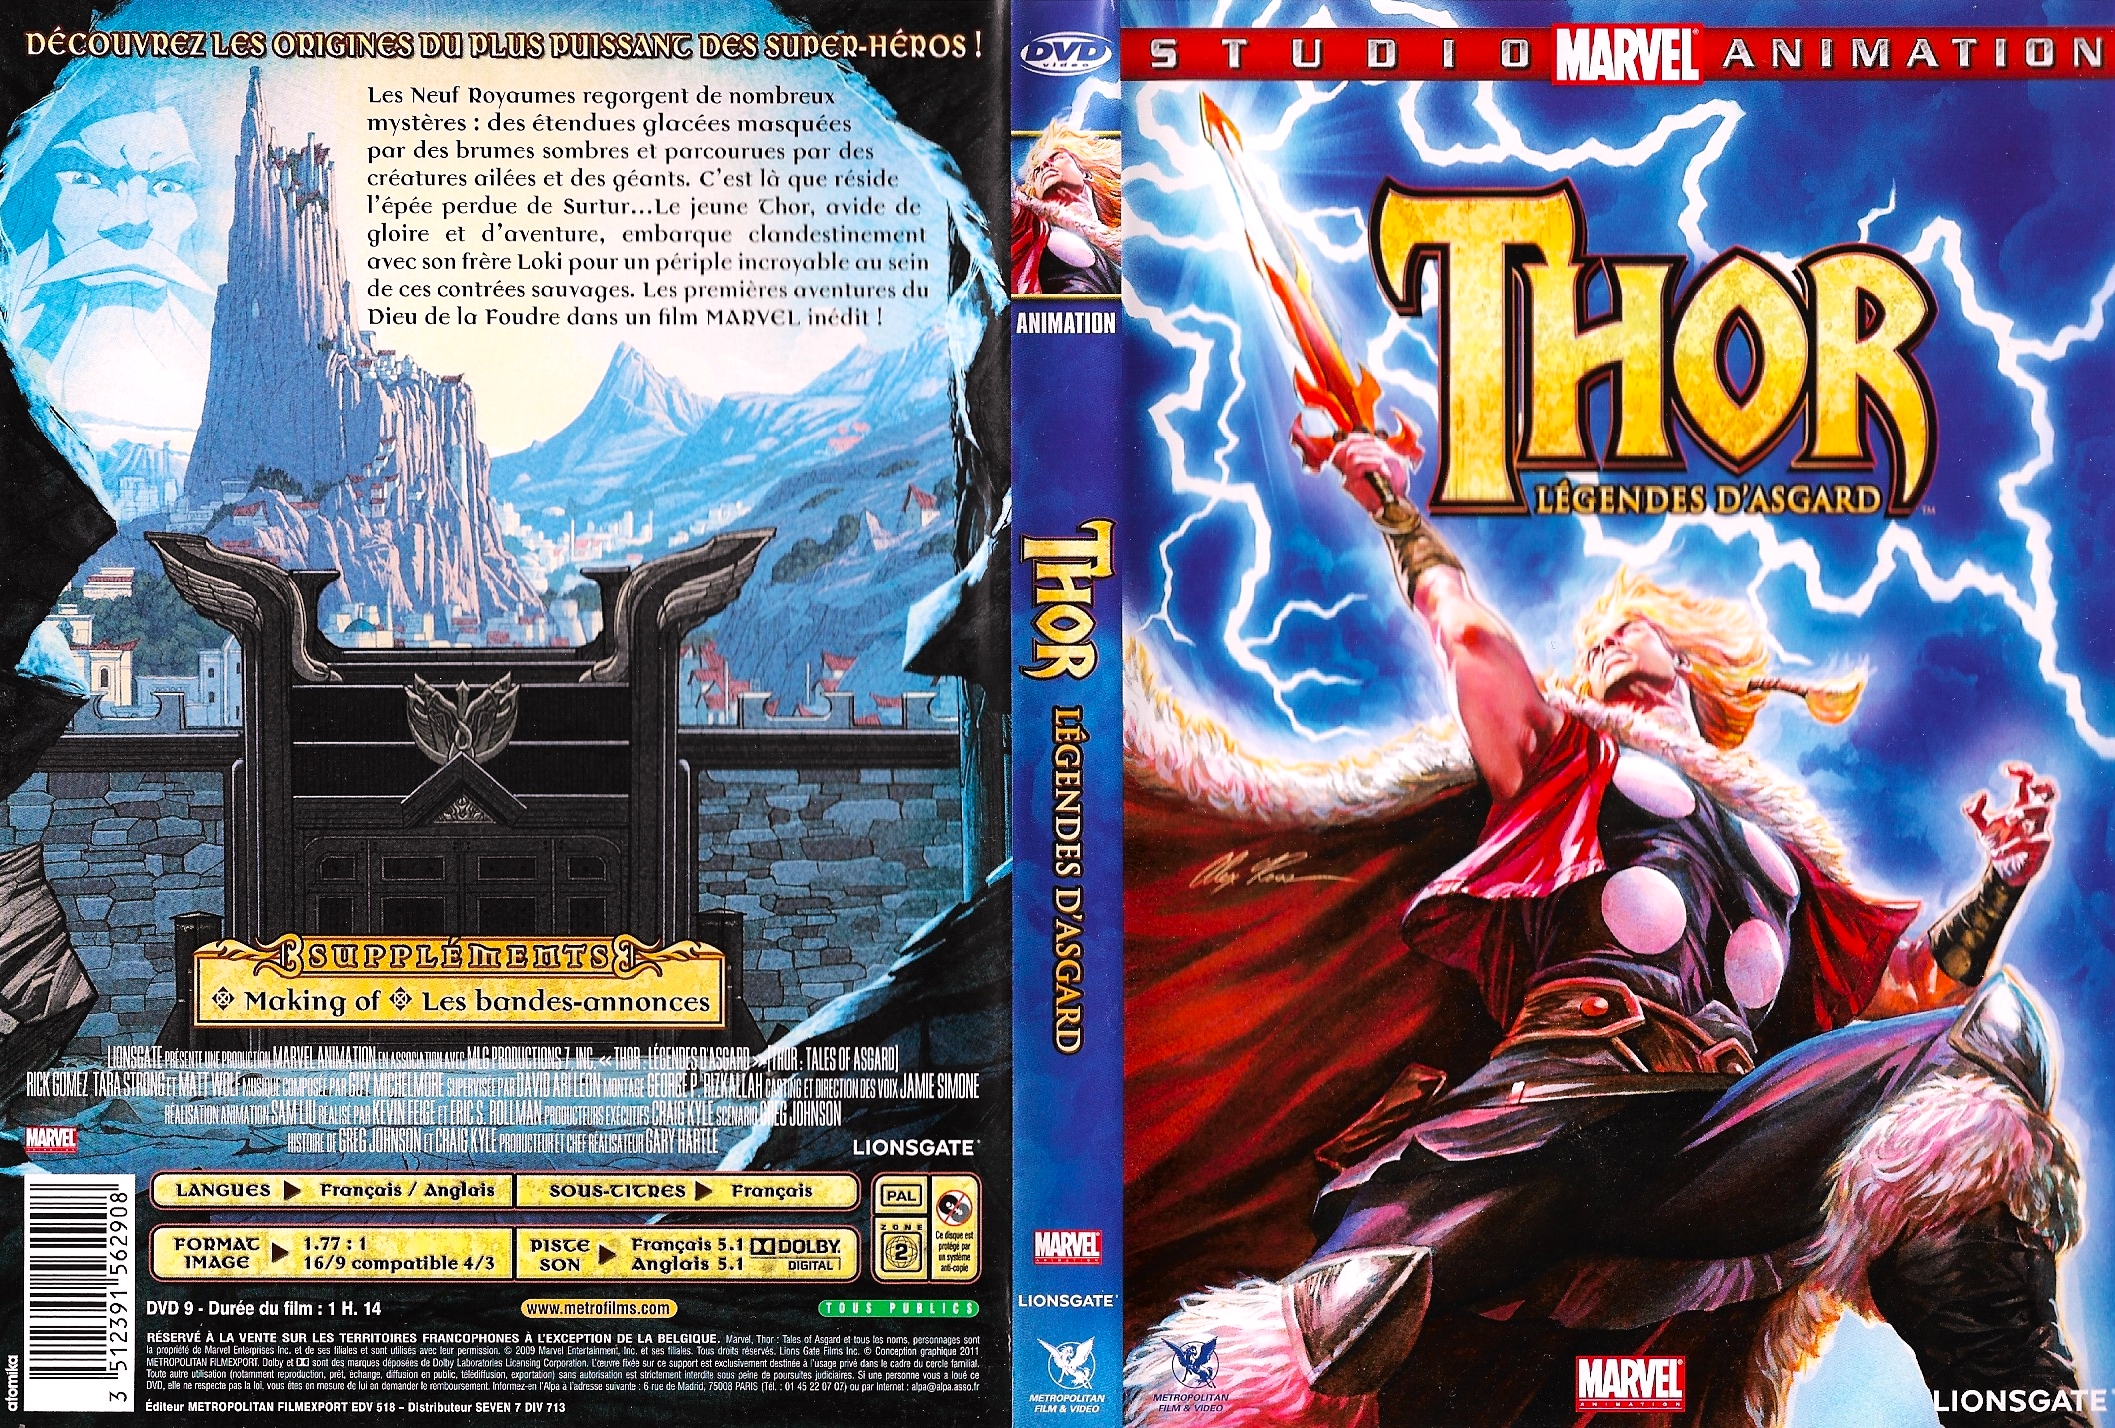 Jaquette DVD Thor Lgendes d